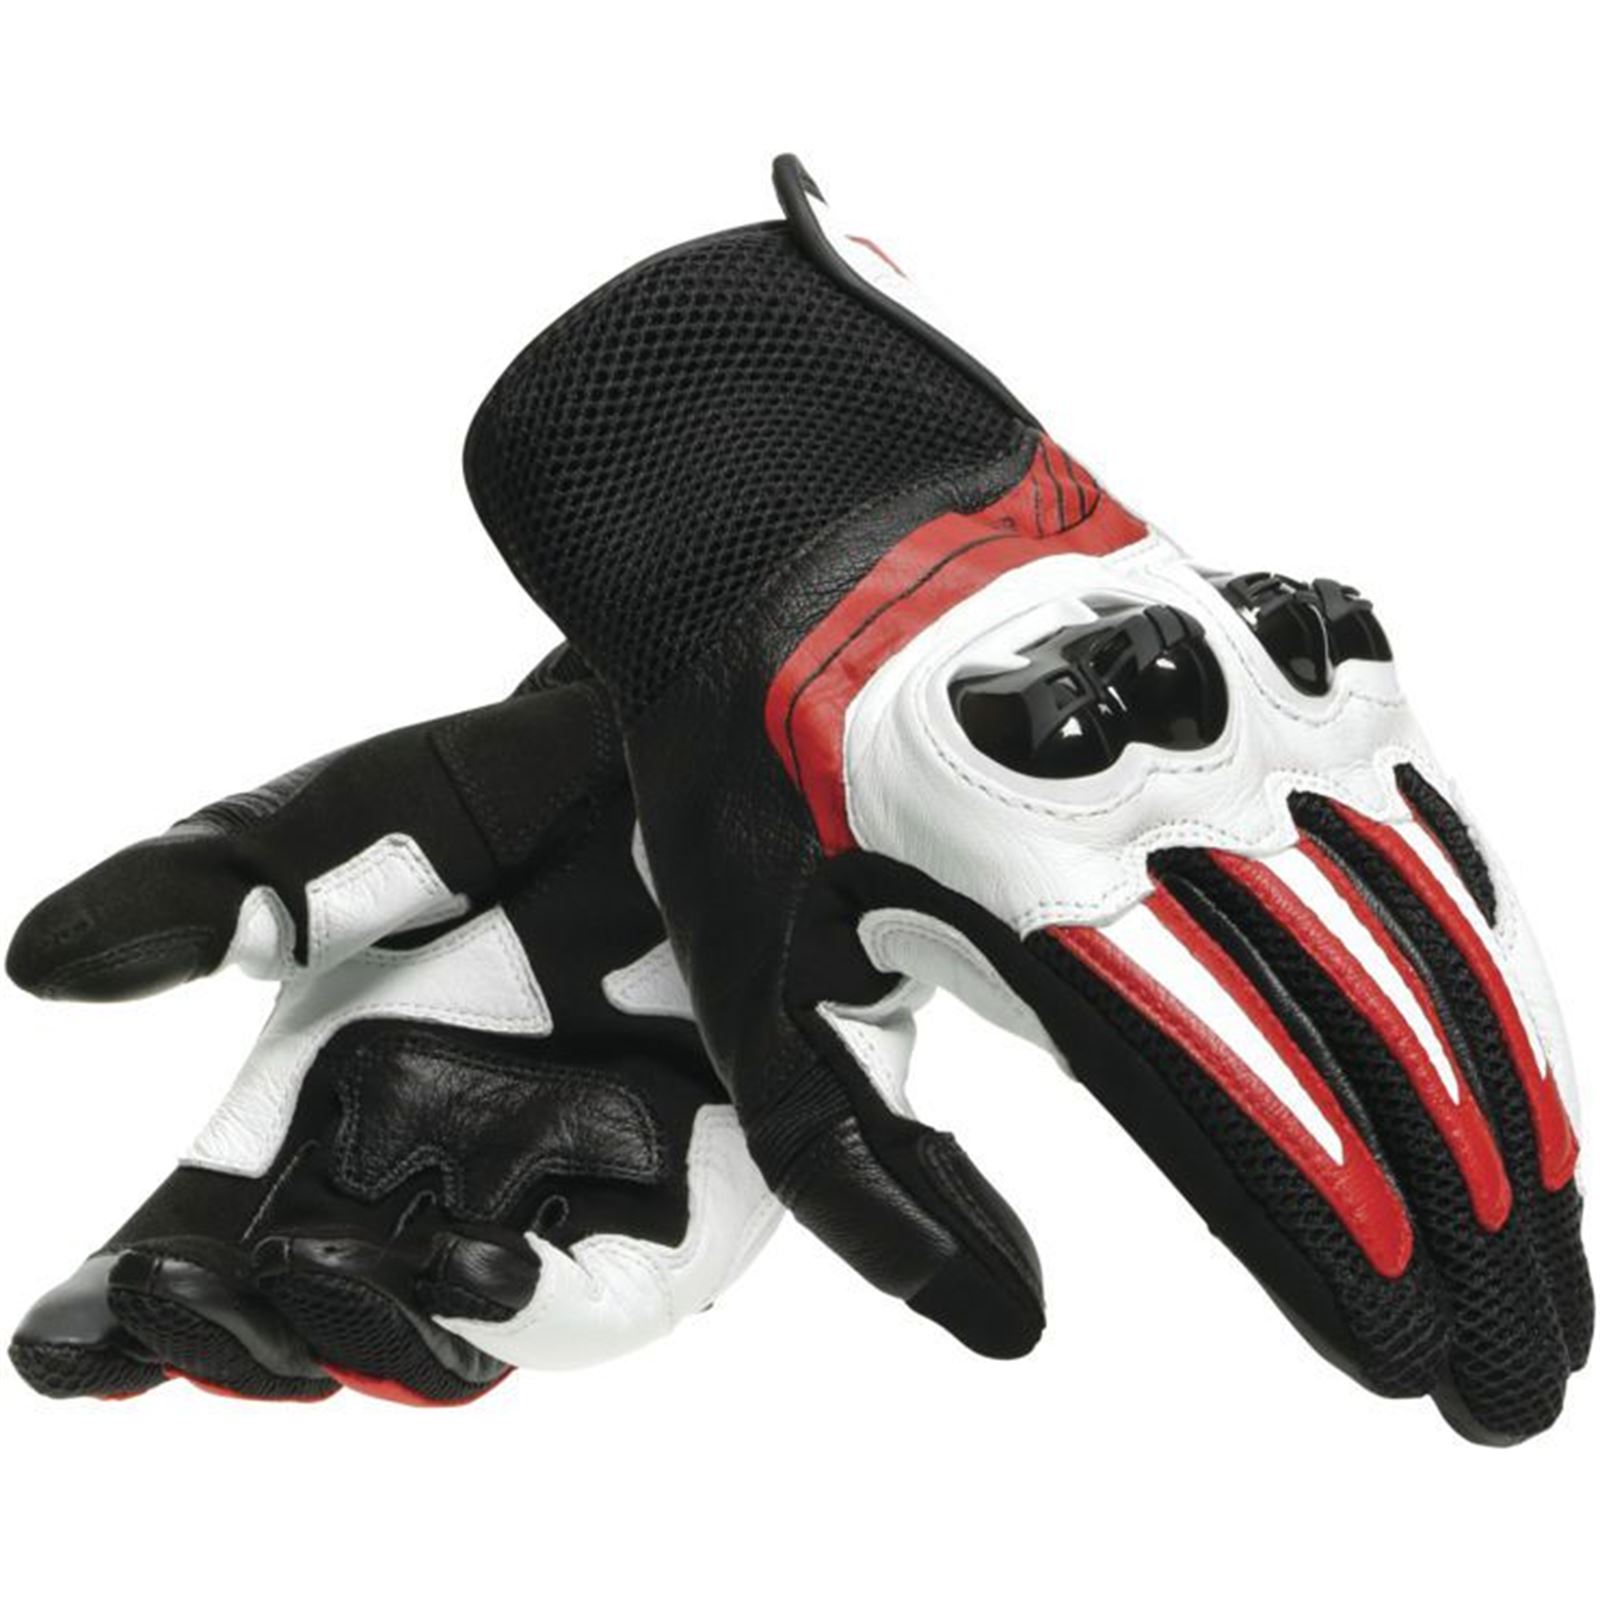 Dainese Mig 3 Gloves - XL - Black/White/Red